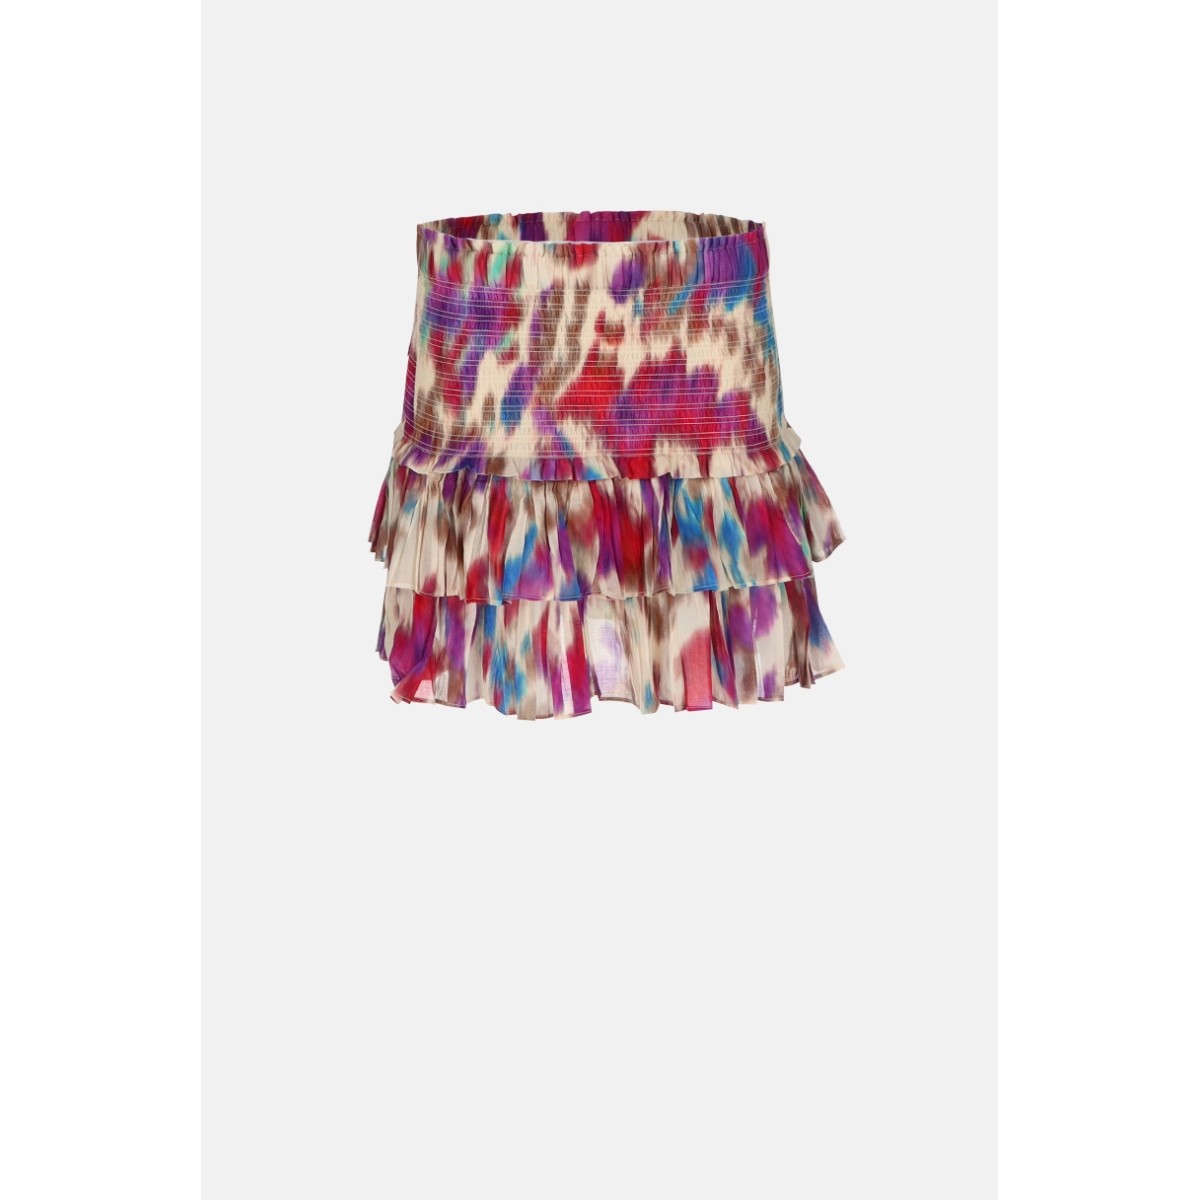 Naomi" Marant Etoile skirt